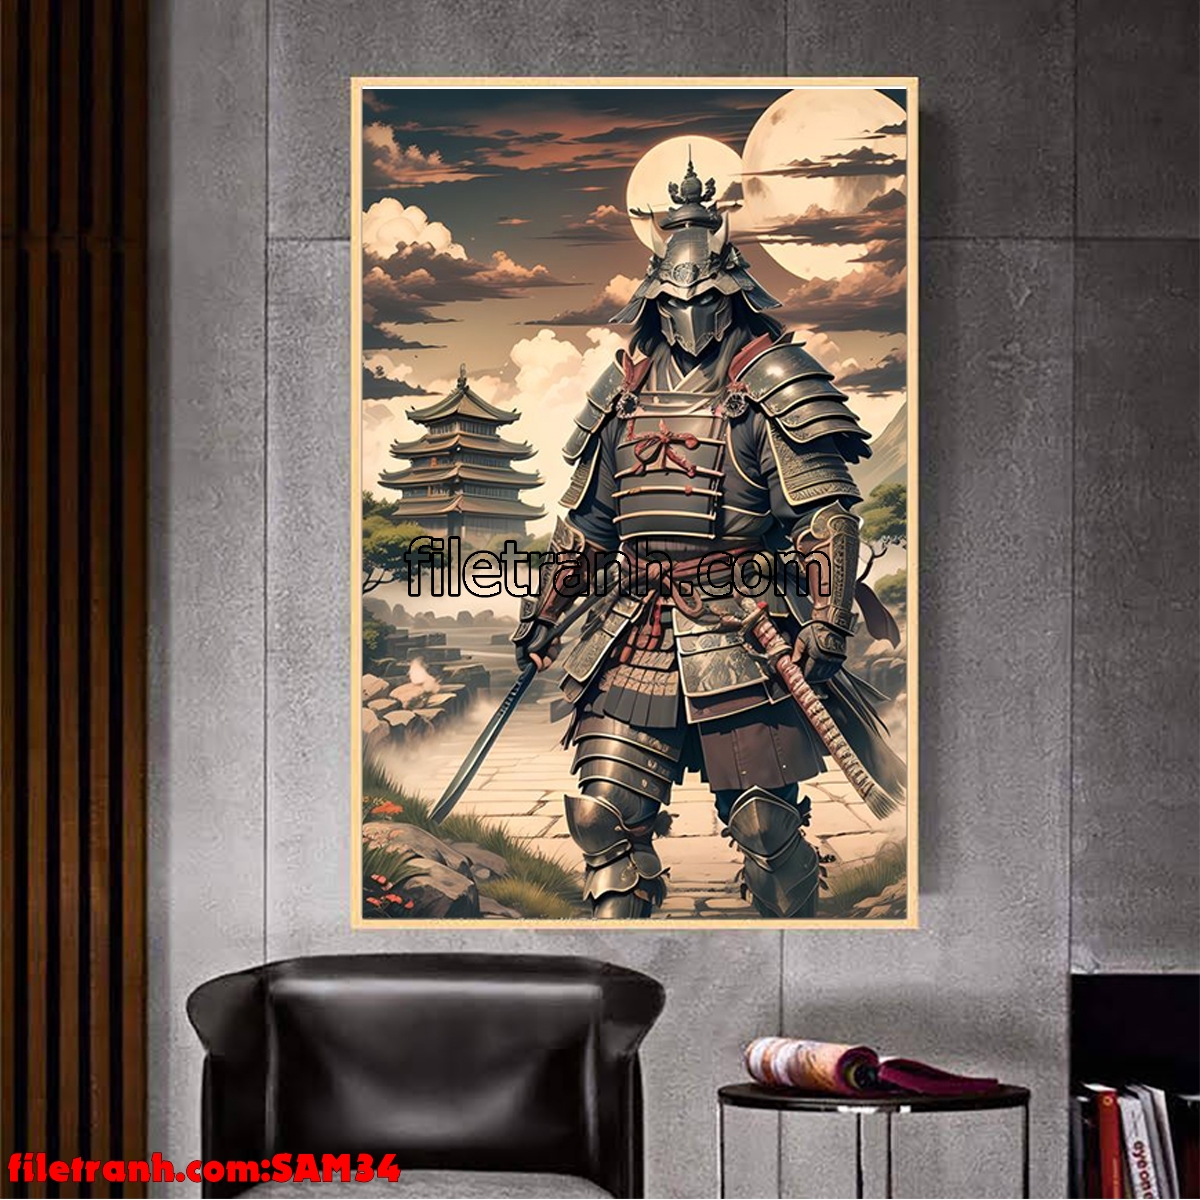 https://filetranh.com/samurai/file-tranh-samurai-vo-si-nhat-ban-sam34.html